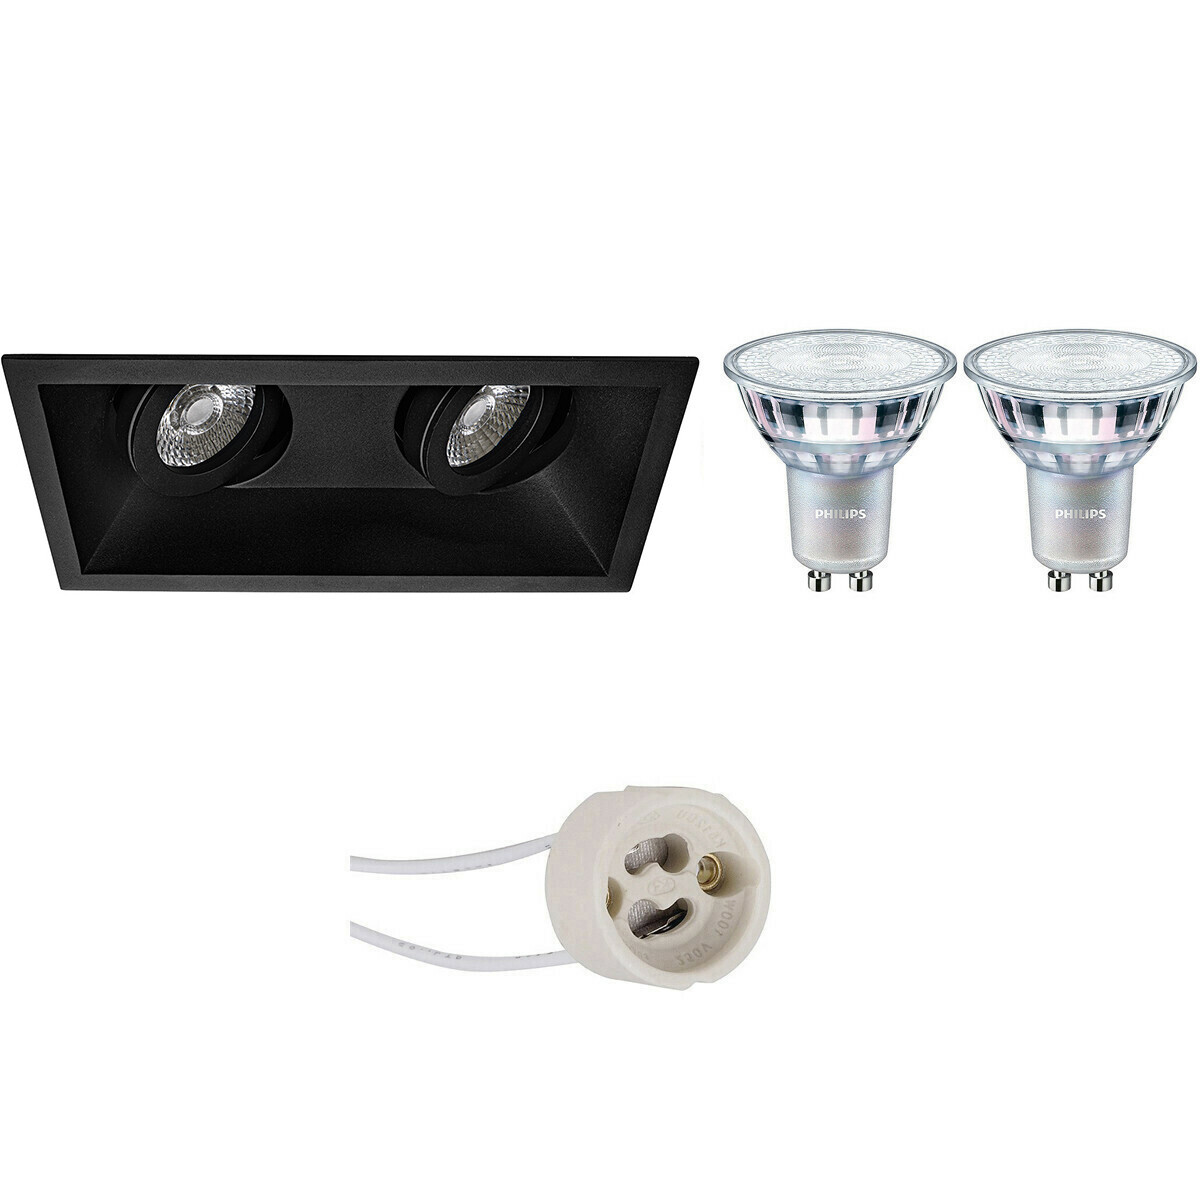 LED Spot Set - Pragmi Zano Pro - GU10 Fitting - Inbouw Rechthoek Dubbel - Mat Zwart - Kantelbaar - 185x93mm - Philips - MASTER 927 36D VLE - 3.7W - Warm Wit 2200K-2700K - DimTone Dimbaar